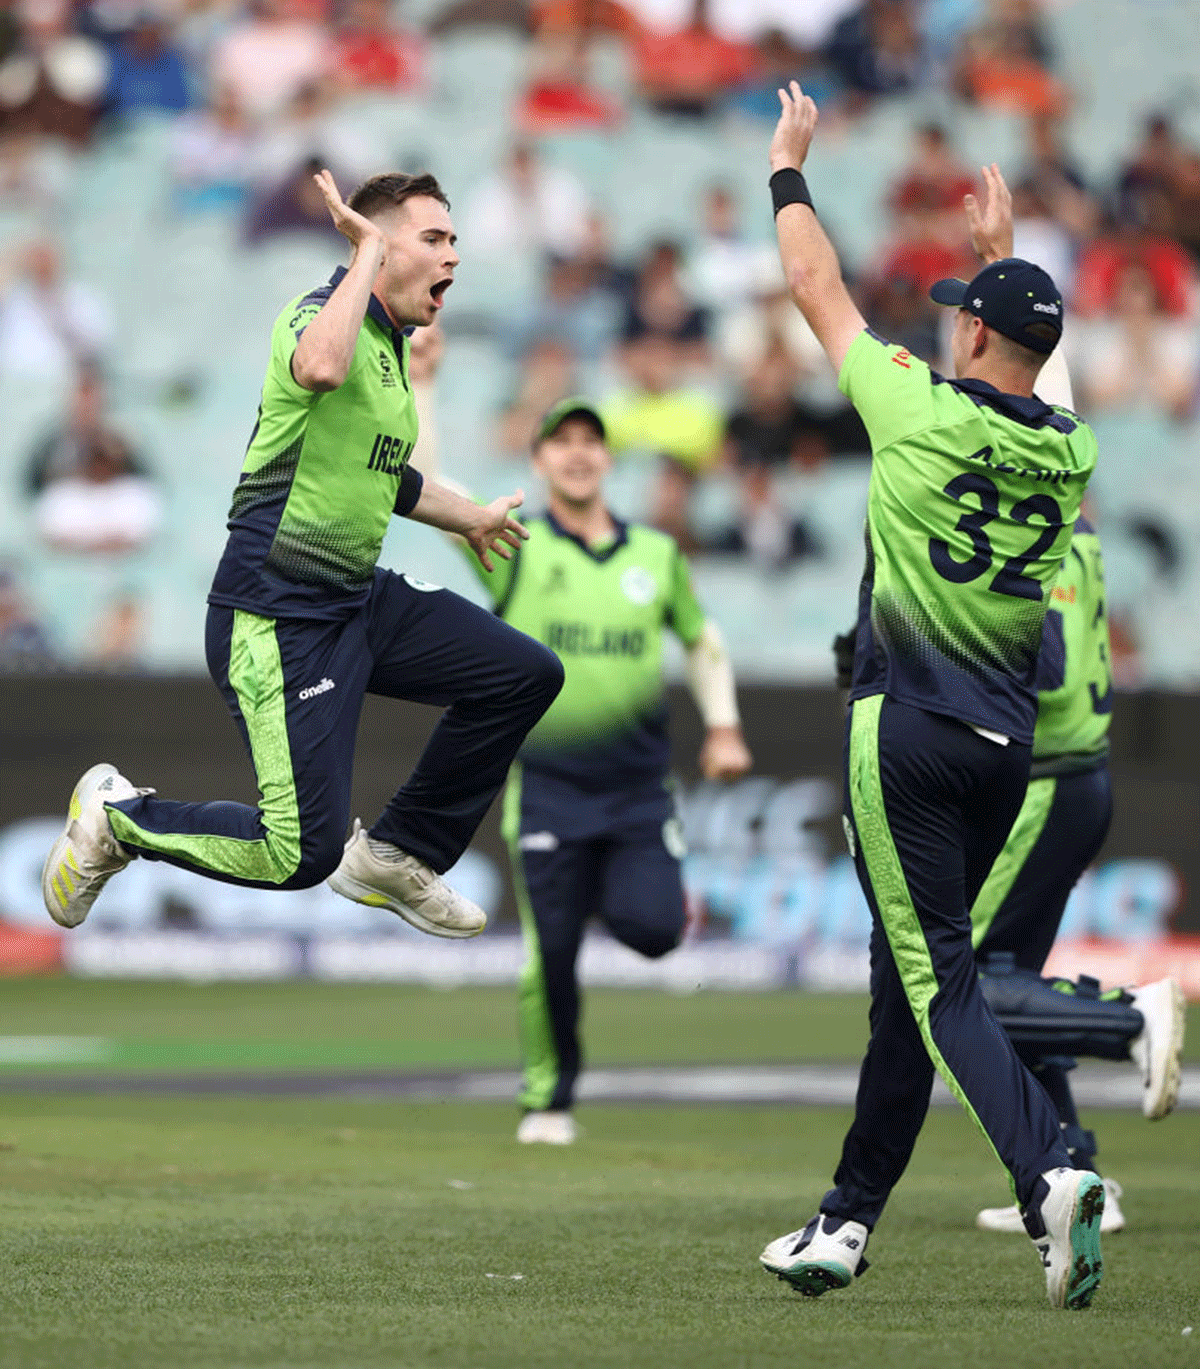 Ireland's Josh Little celebrates taking the wicket of England captain Jos Buttler